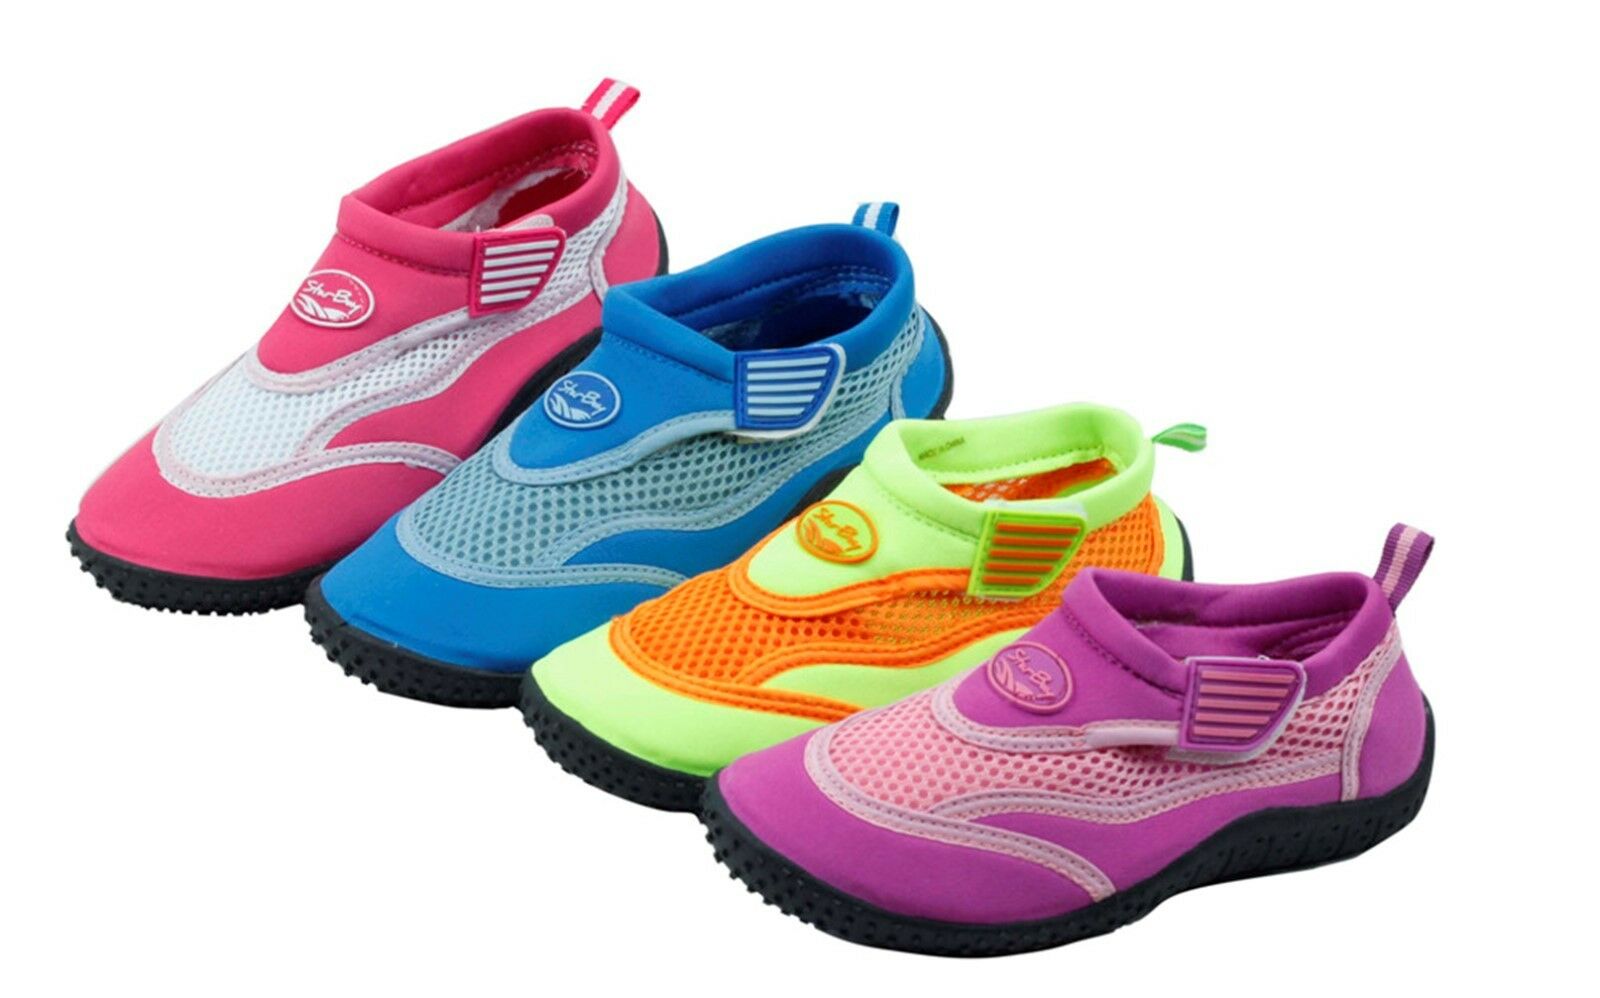 Childrens Kids Boys Girls Slip On Water Shoes/aqua Socks/pool Beach,4 Colors New